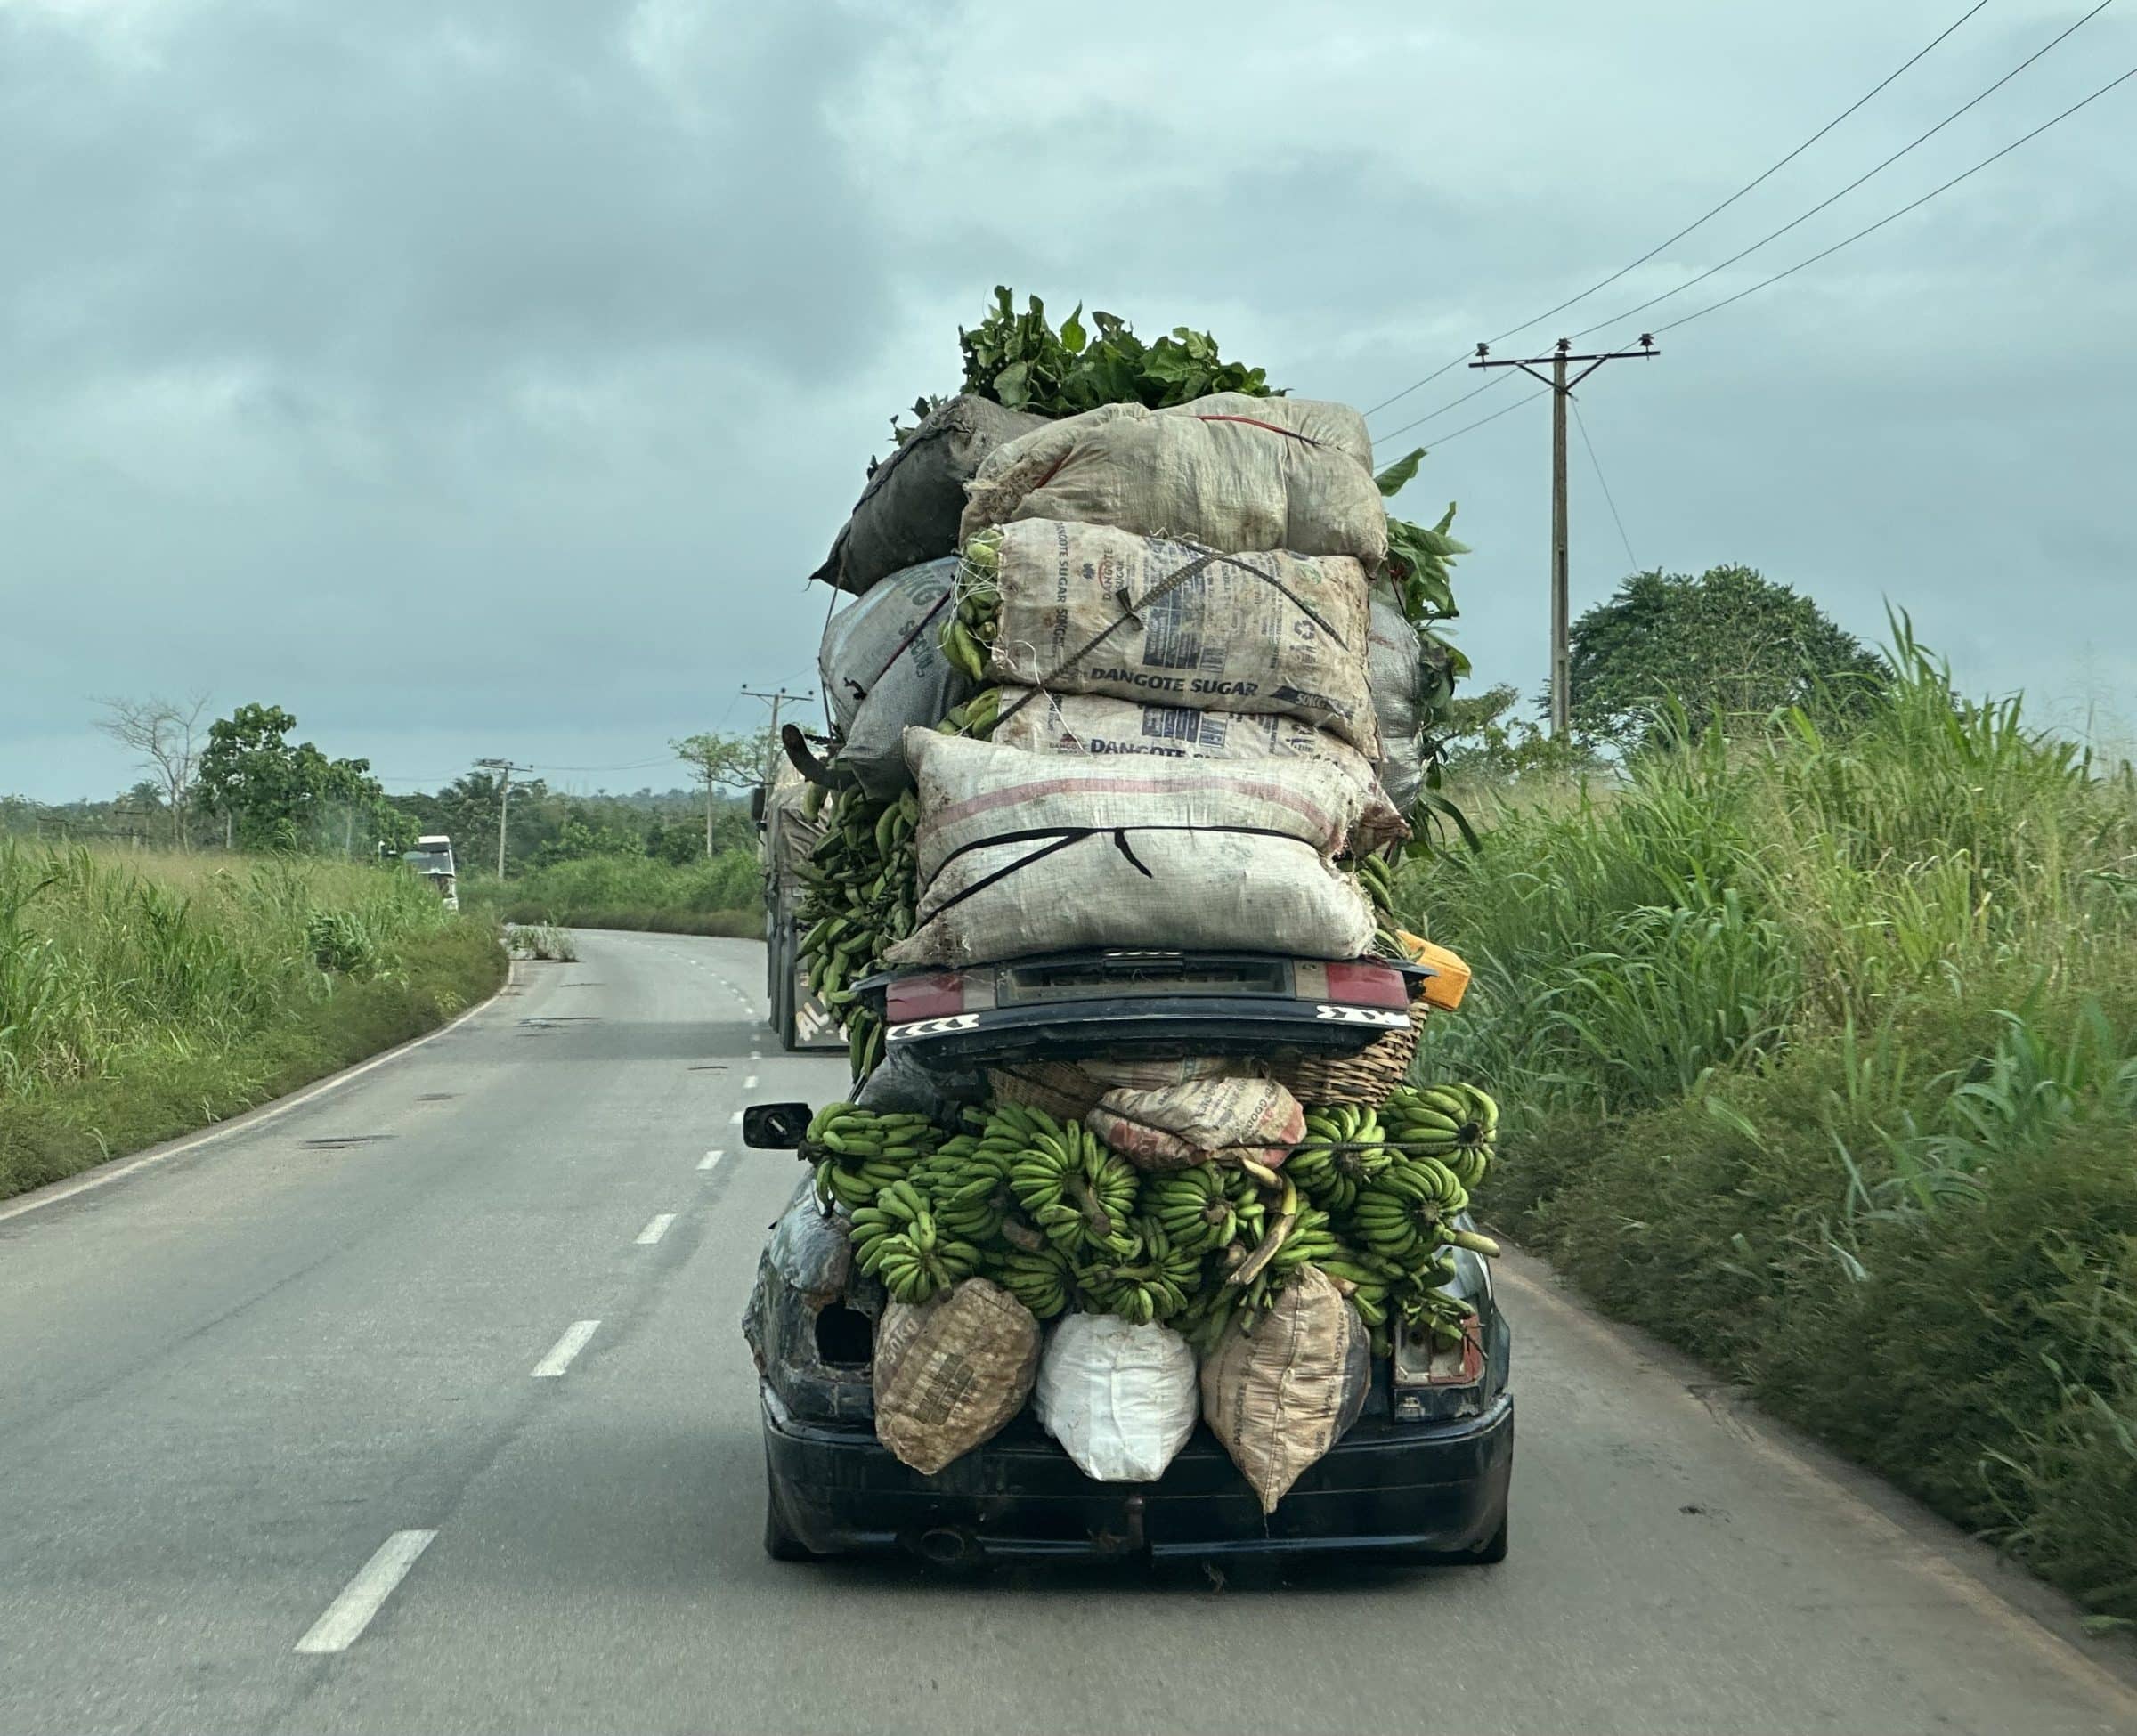 Fully loaded car in Nigeria